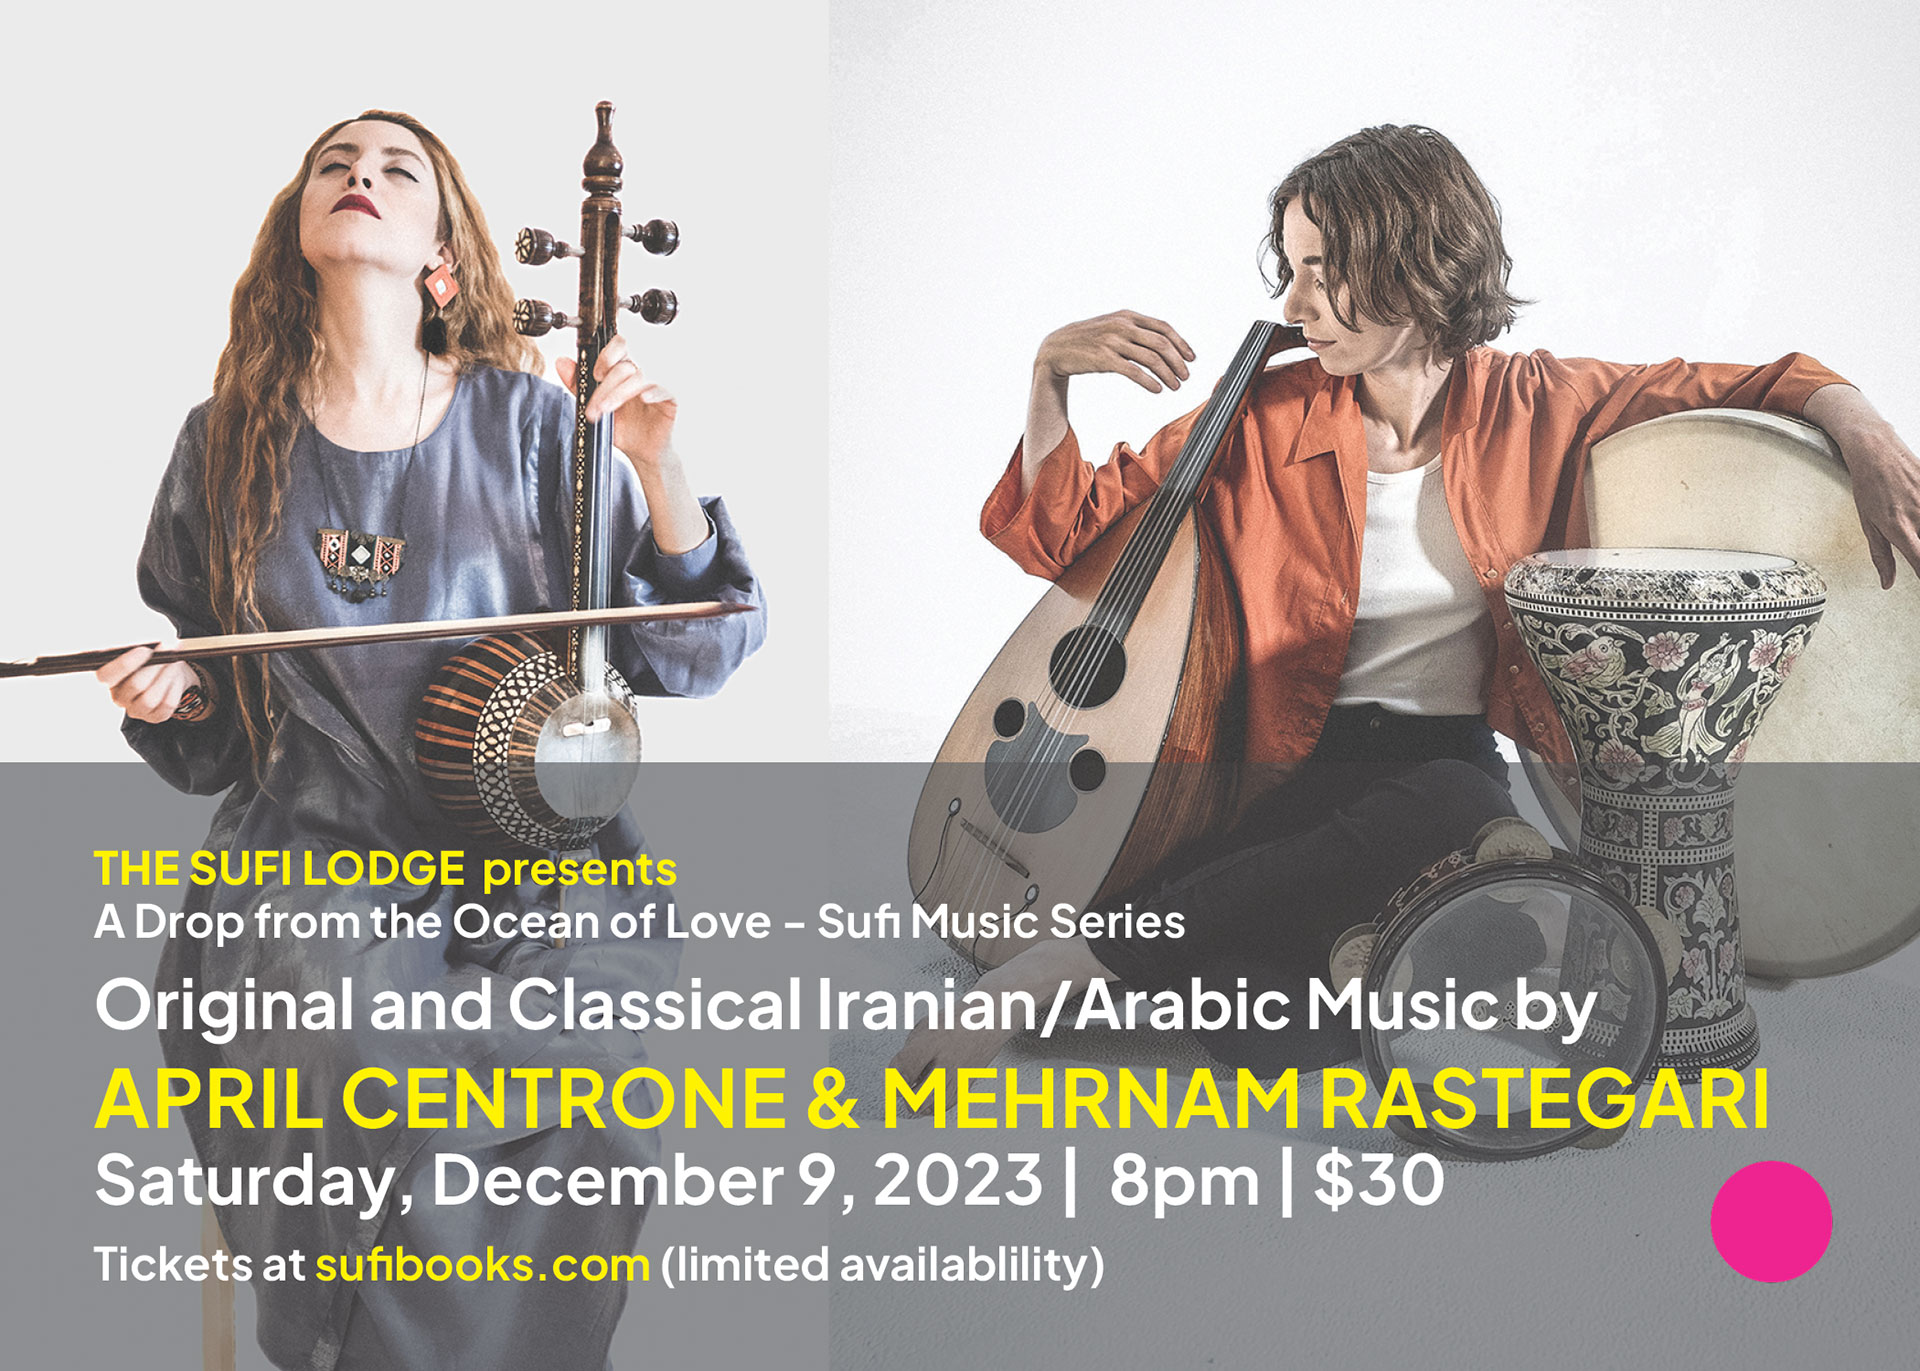 Saturday, December 9, 2023 | Original and Classical Iranian/Arabic Music by April Centrone and Mehrnam Rastegari  |  8pm | $30